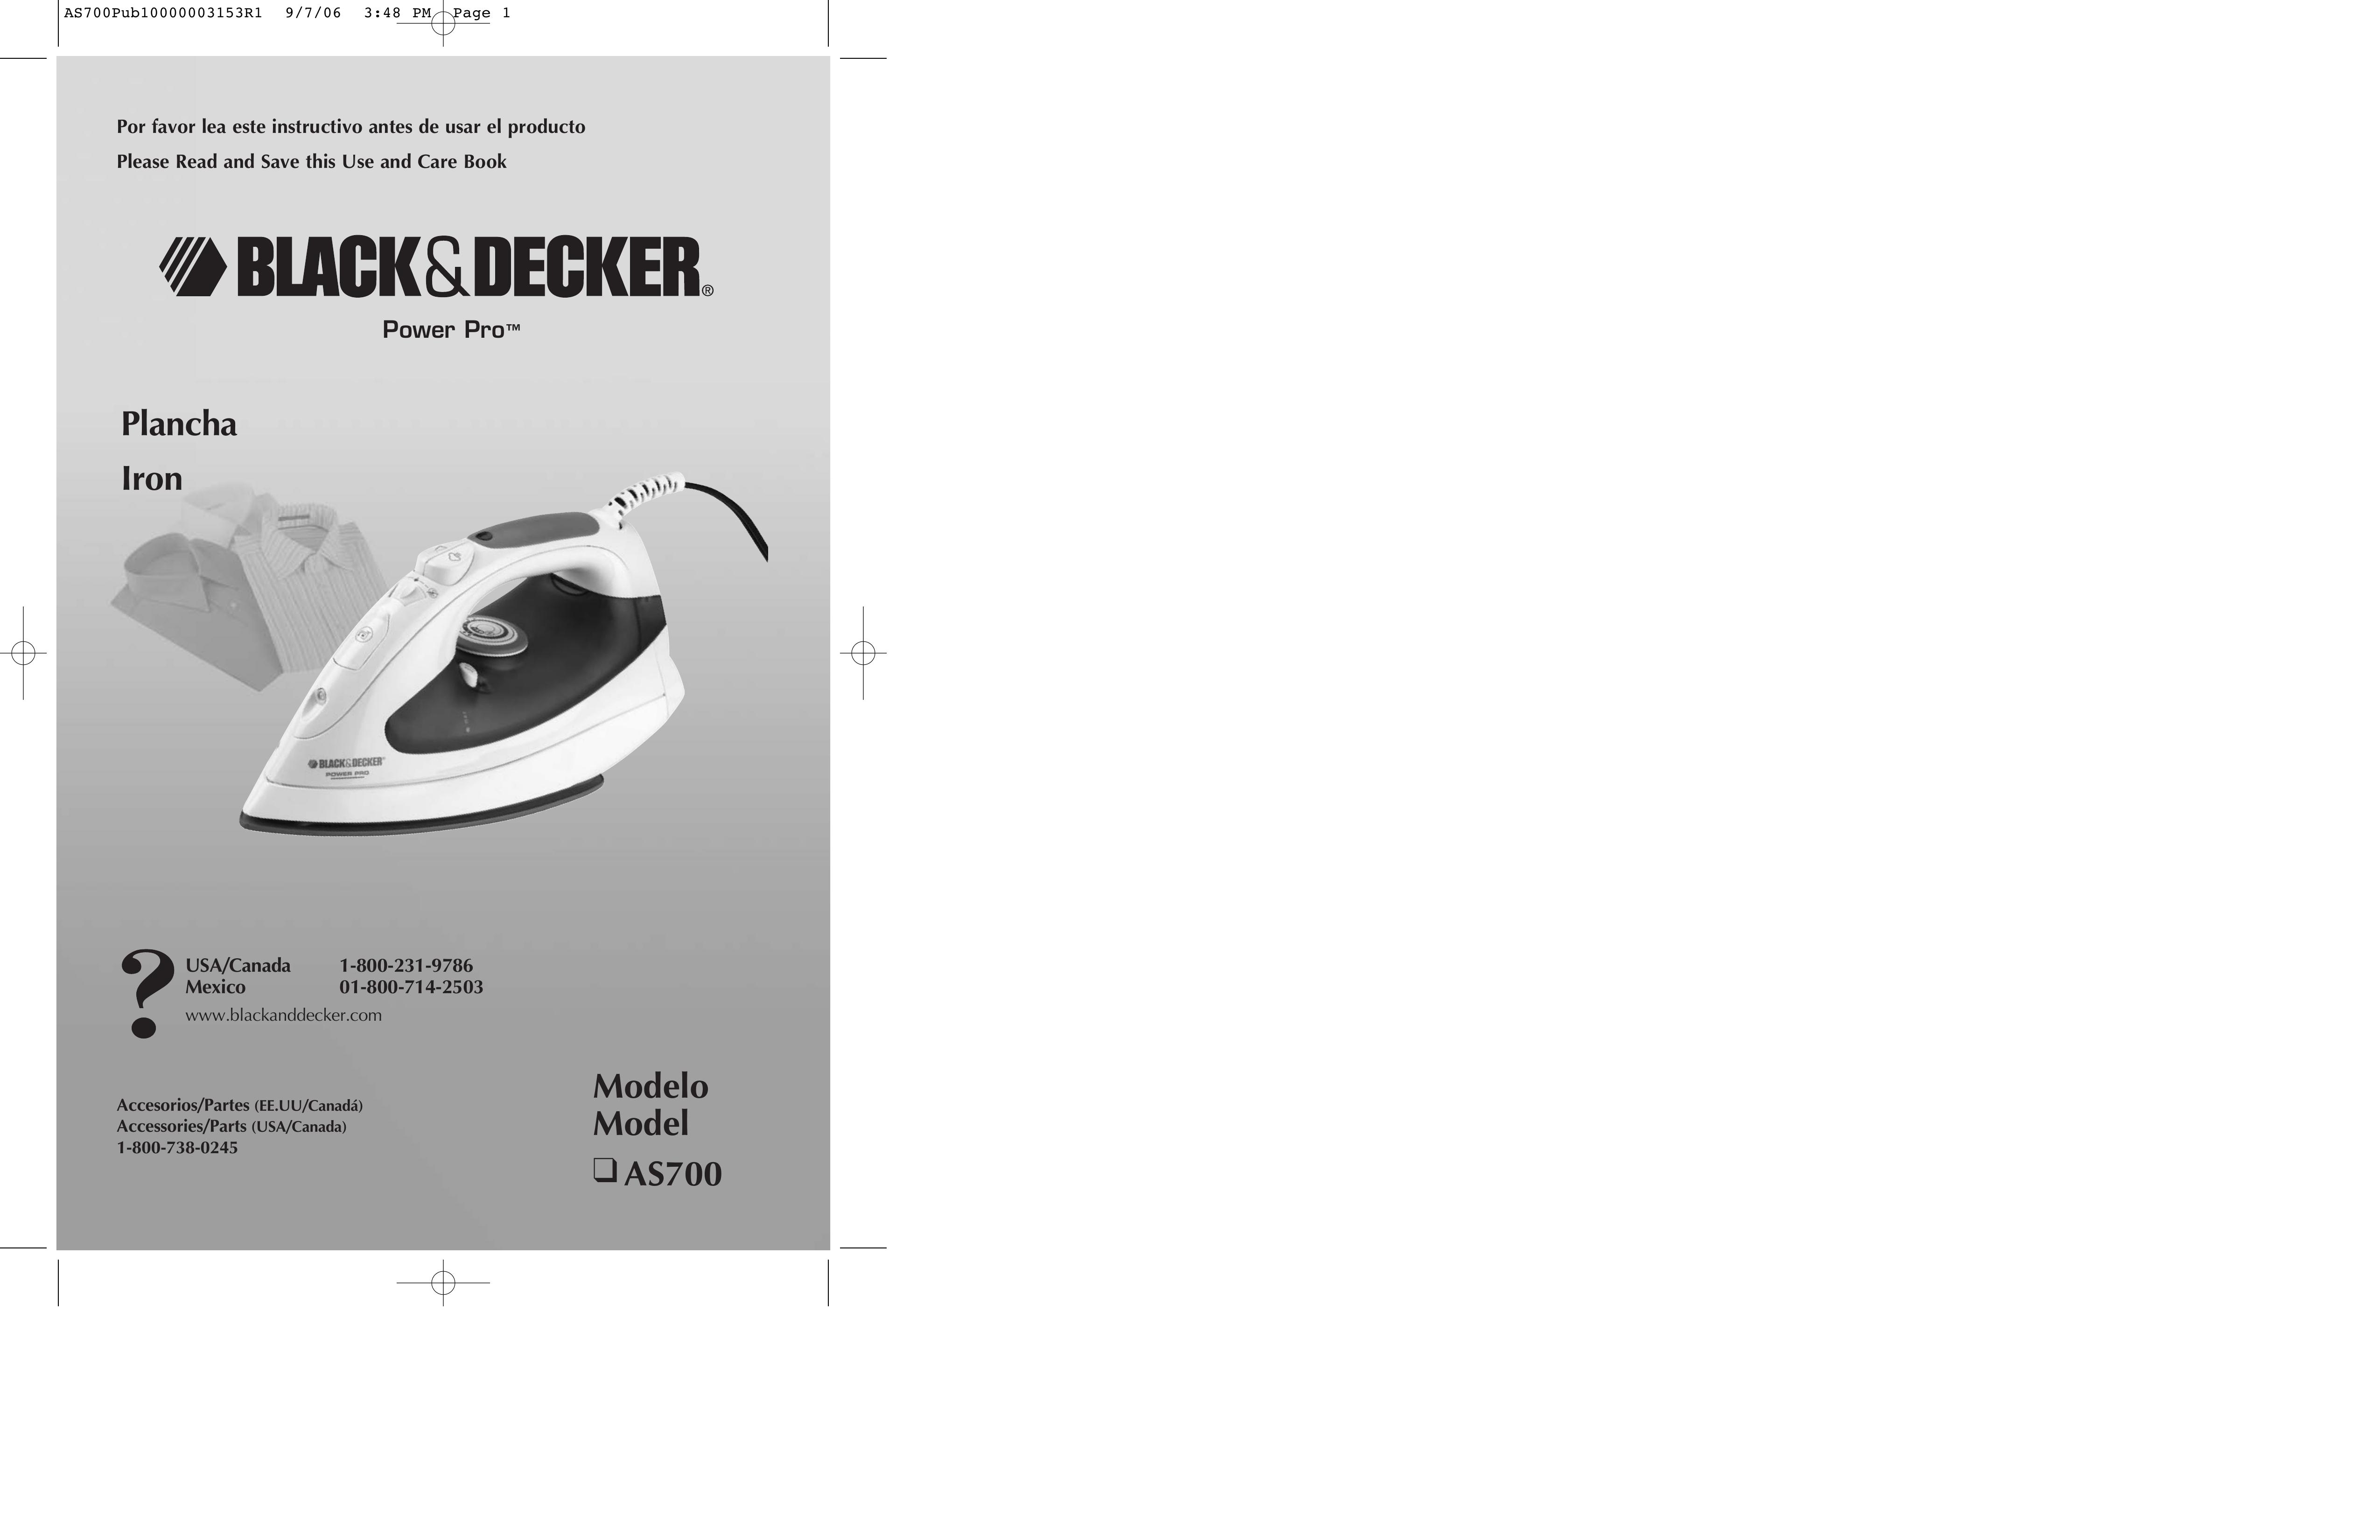 Black & Decker AS700 Iron User Manual